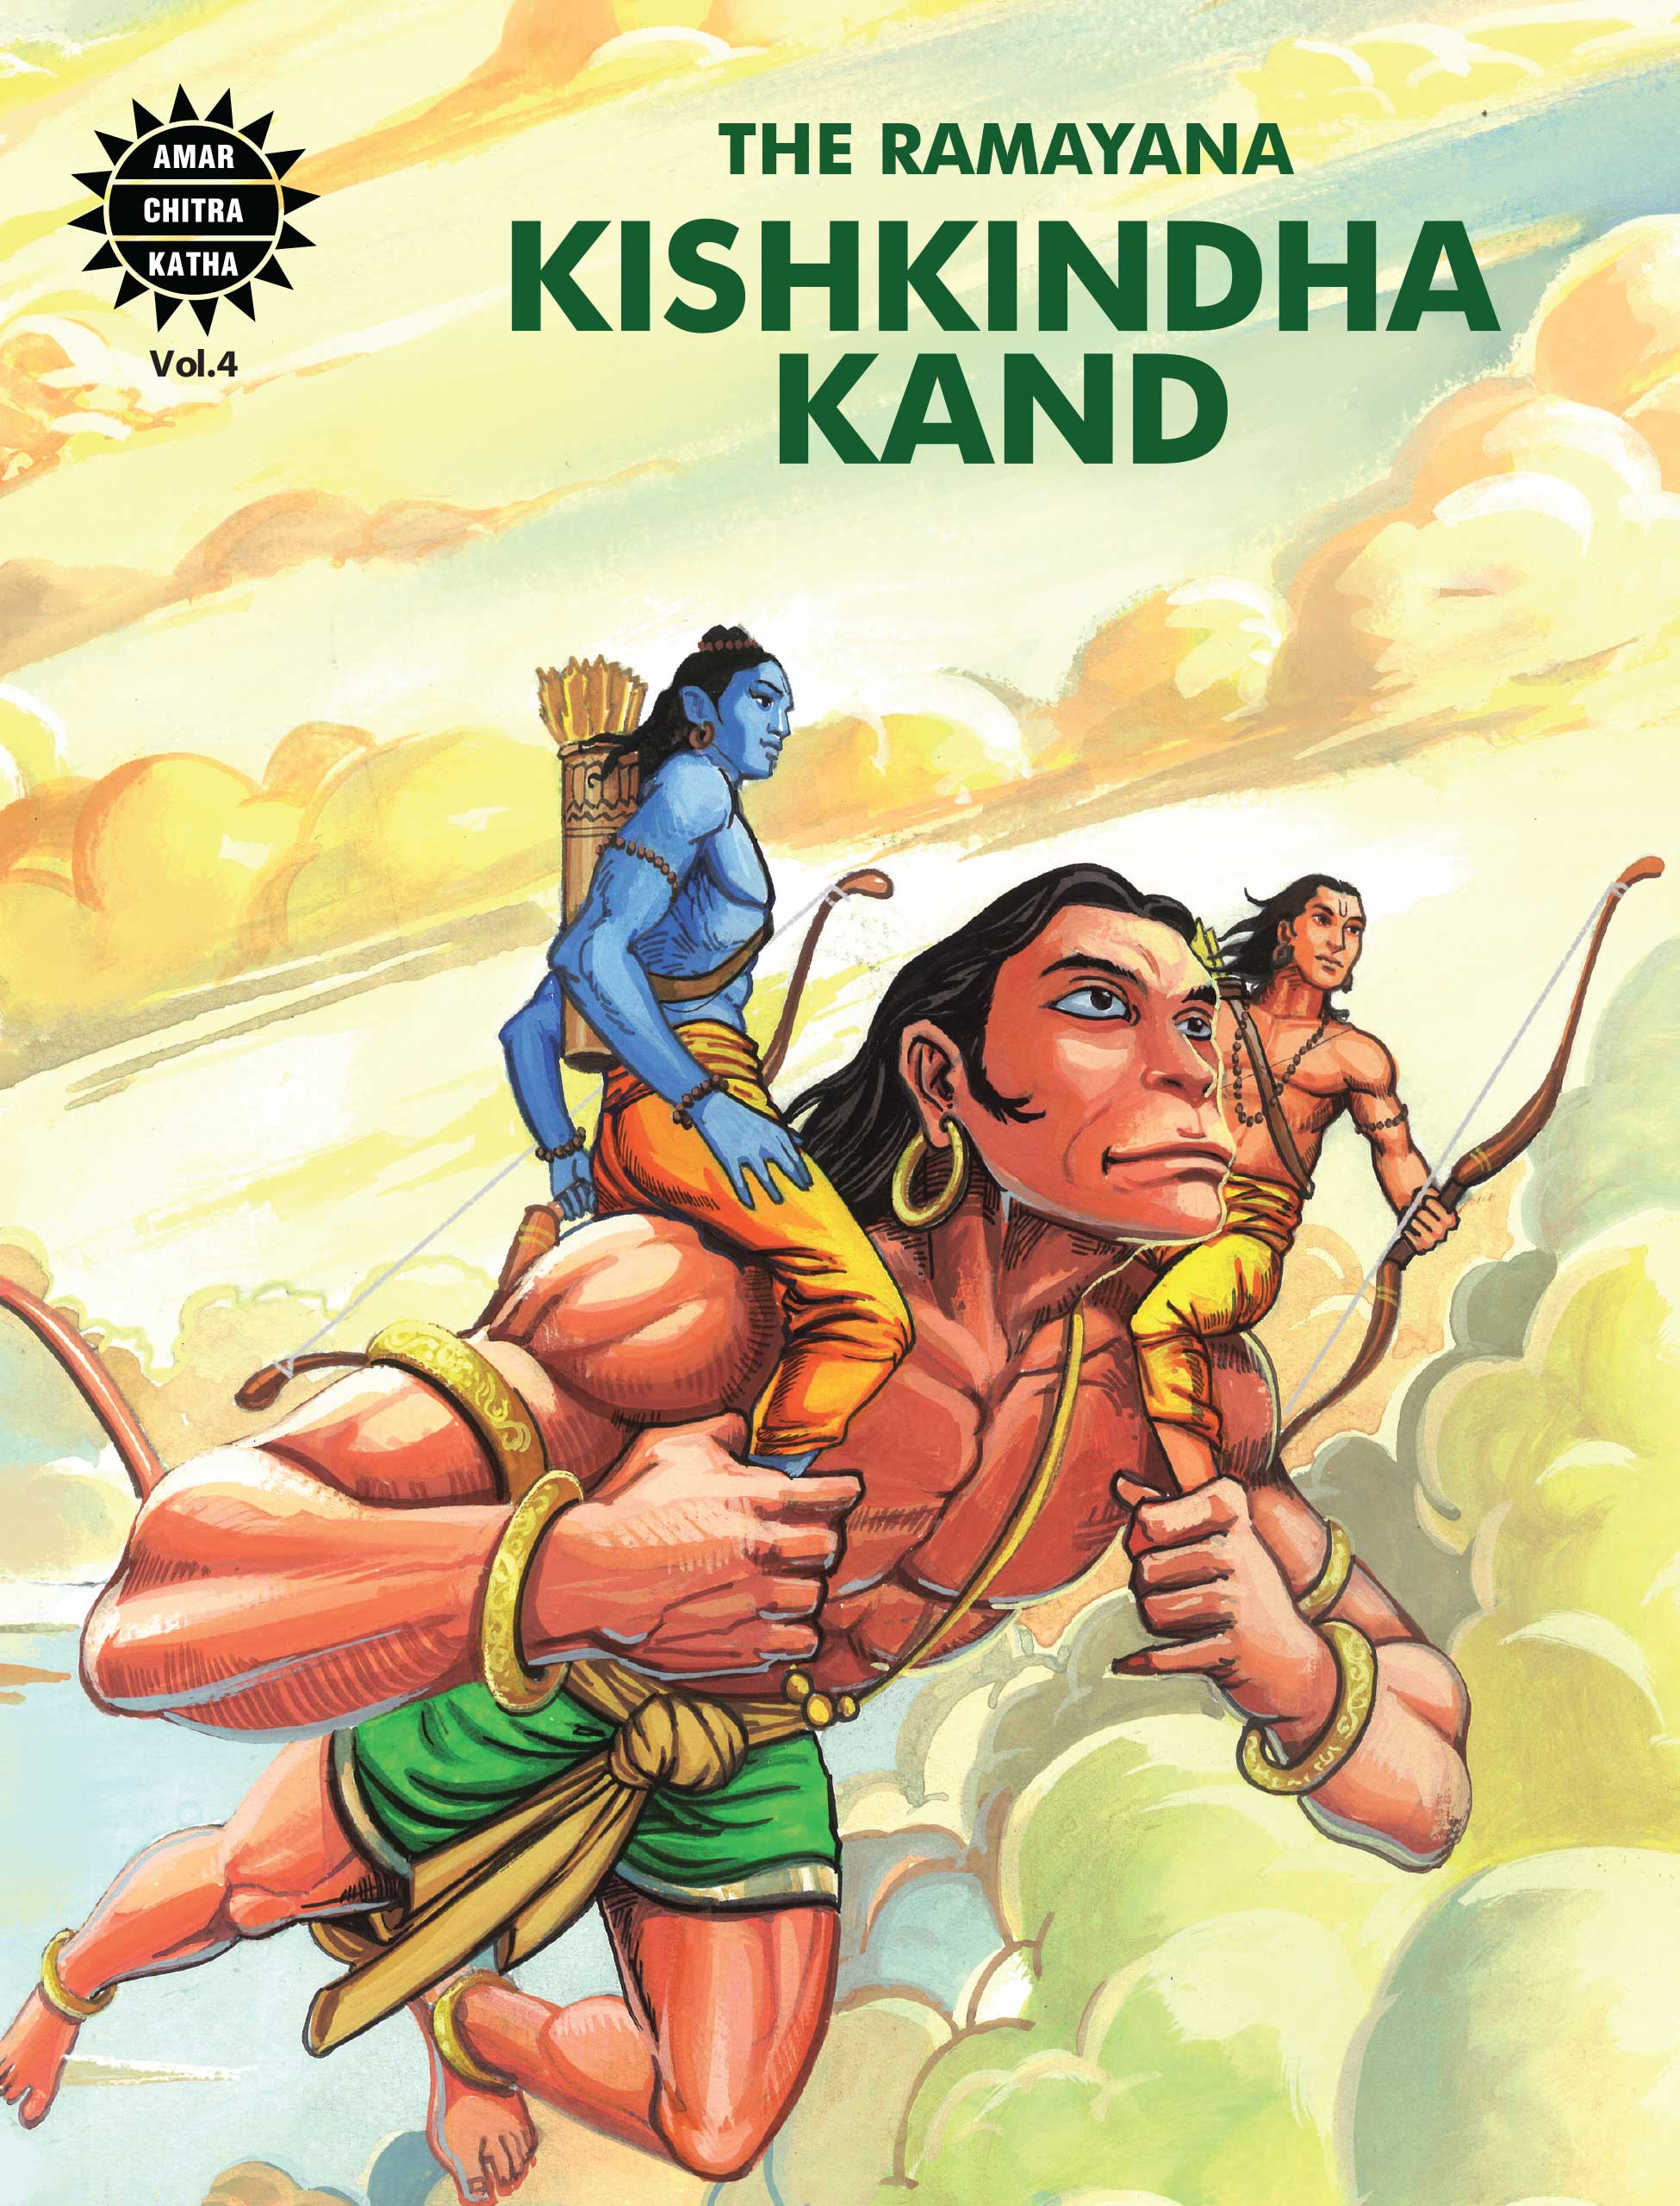 Valmiki’s Ramayana – 6 vol set - Amar Chitra katha